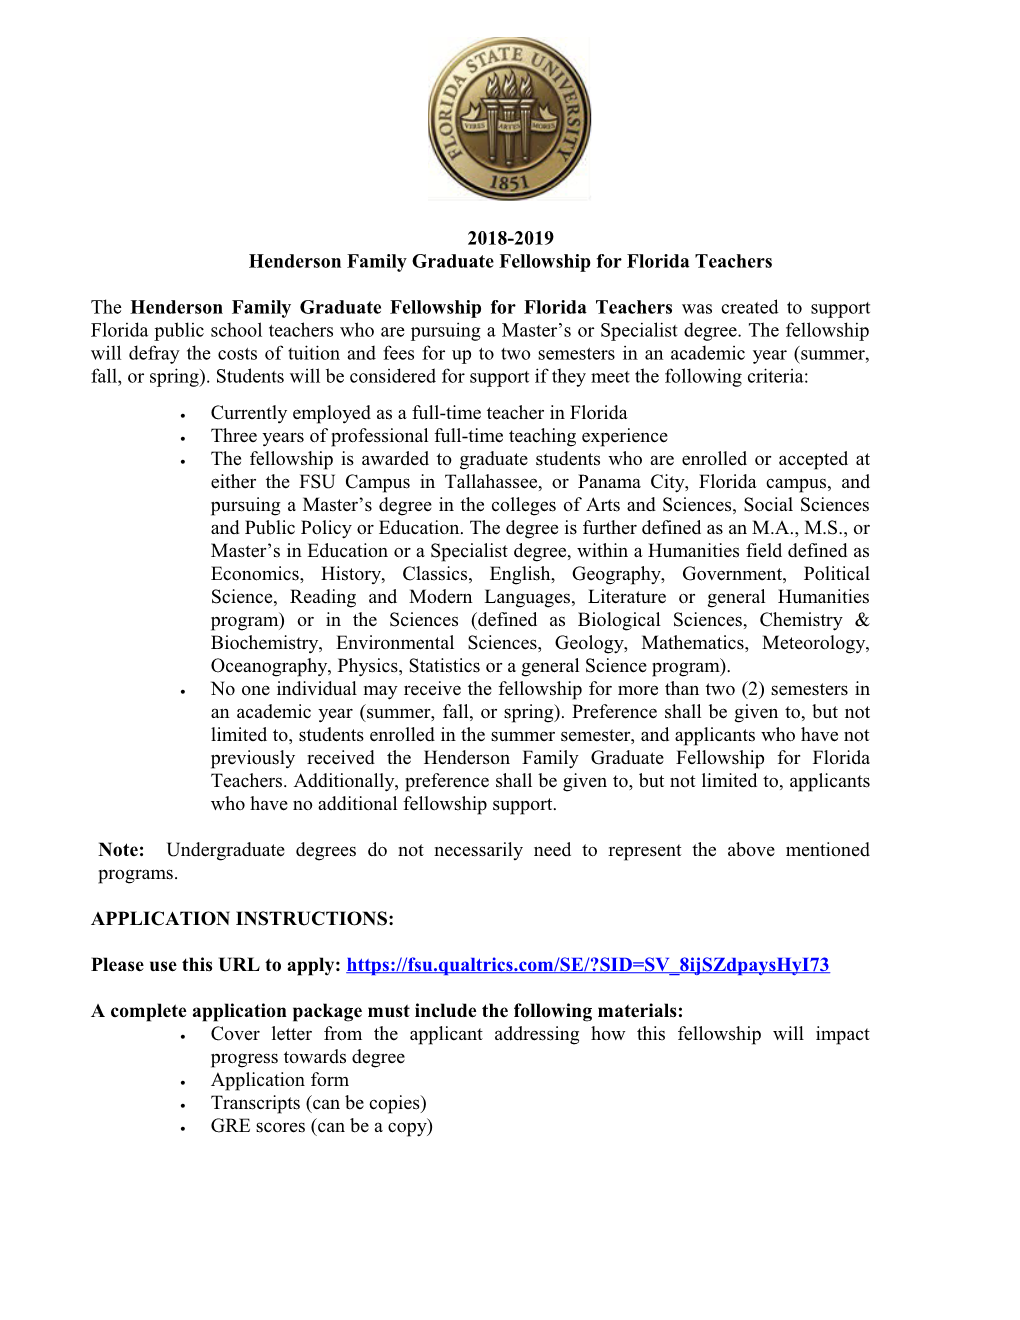 Henderson Family Graduate Fellowship for Florida Teachers